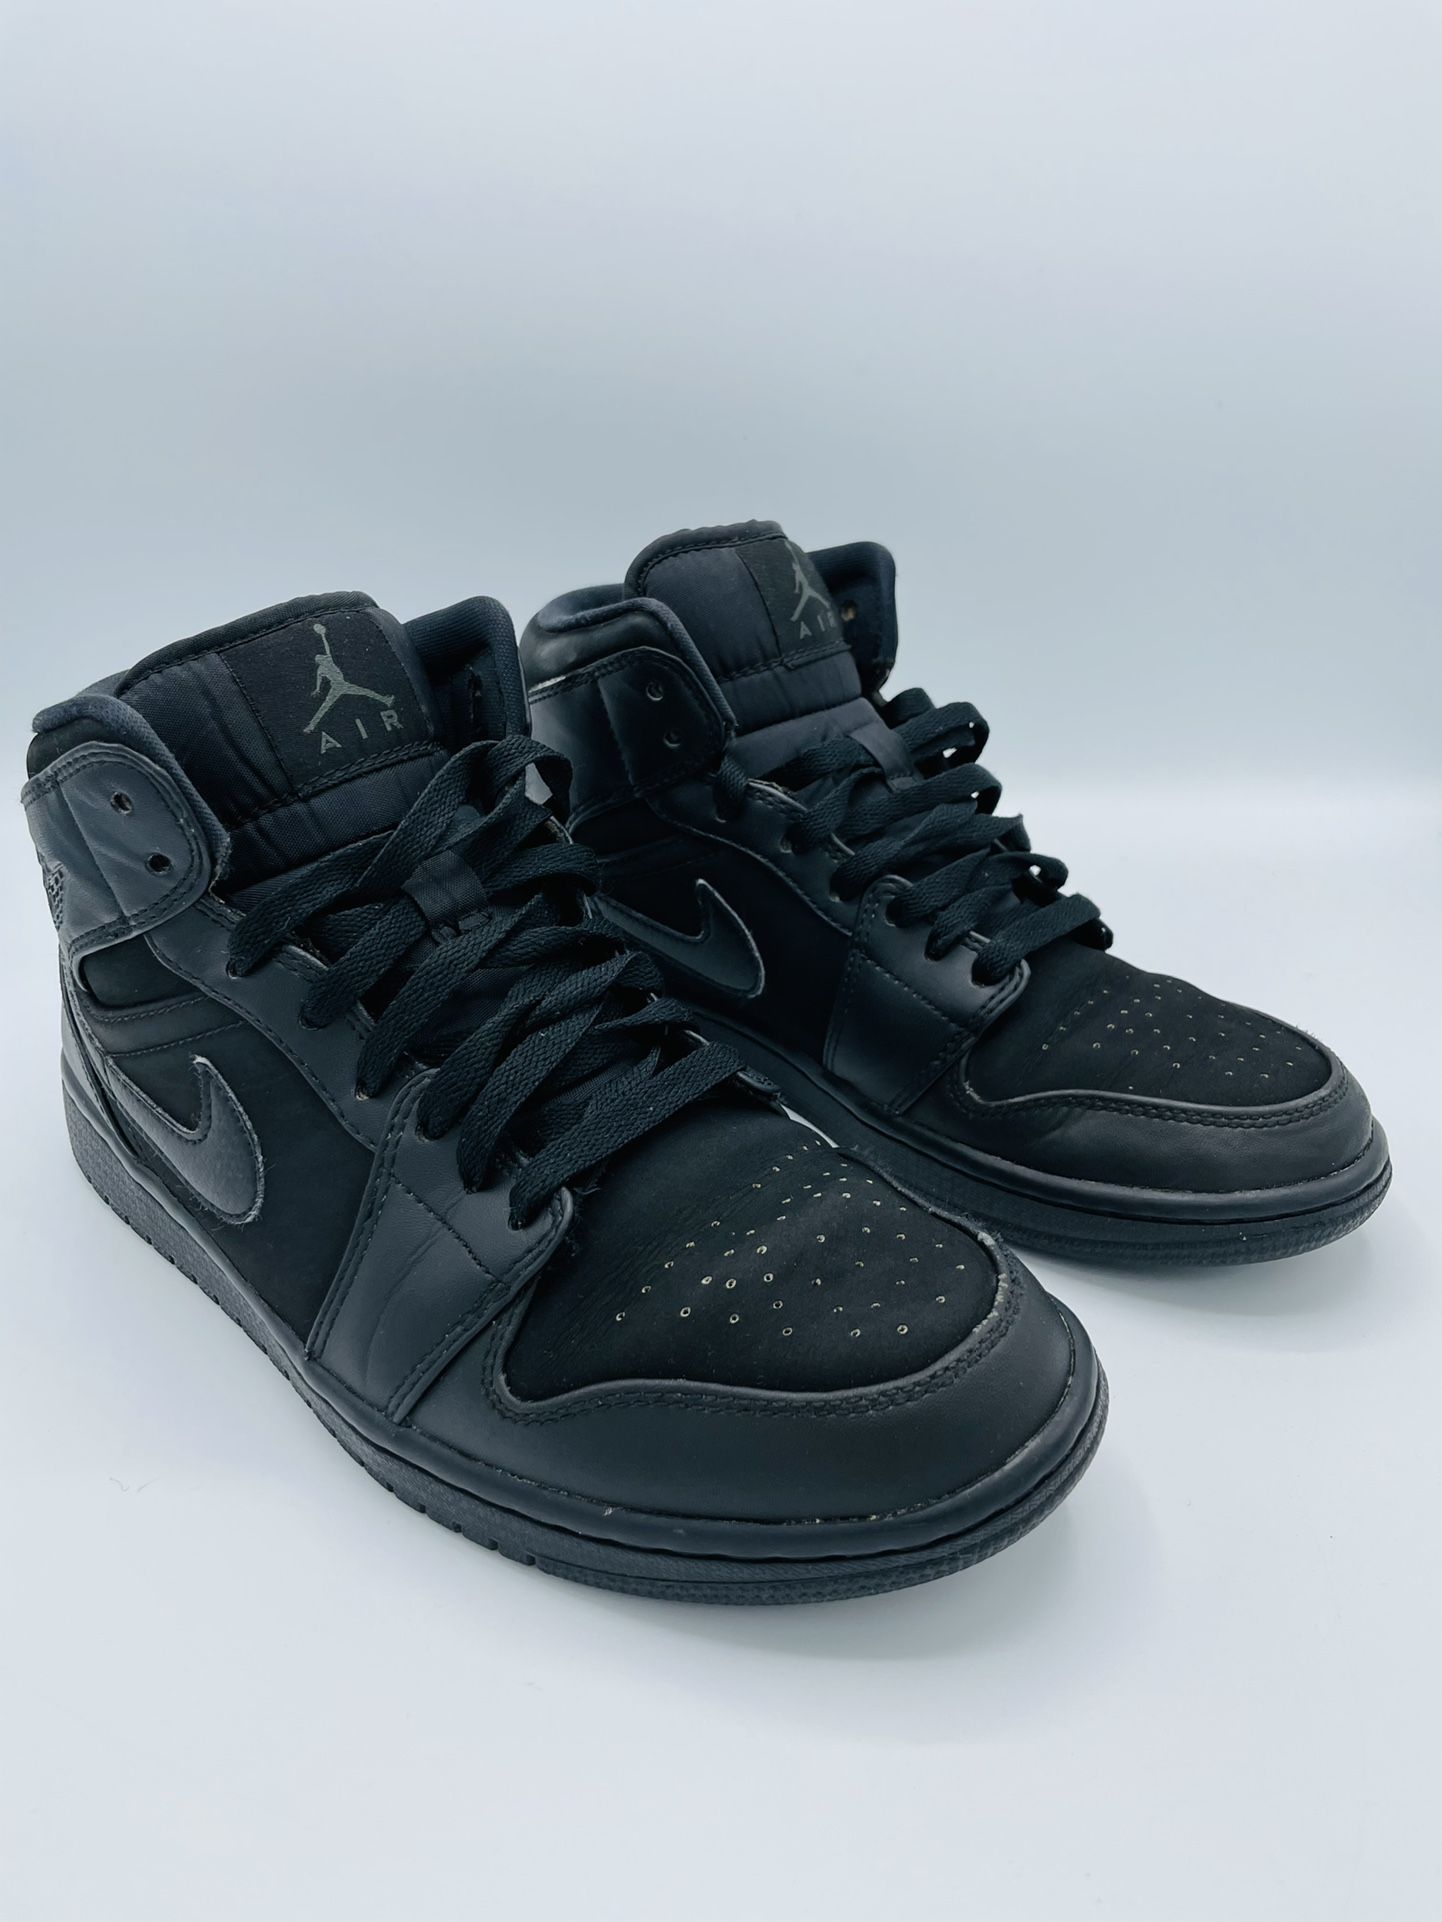 2013 Men Nike Air Jordan 1 Mid 554724 011 Basketball Shoes Sneakers Tripple Black